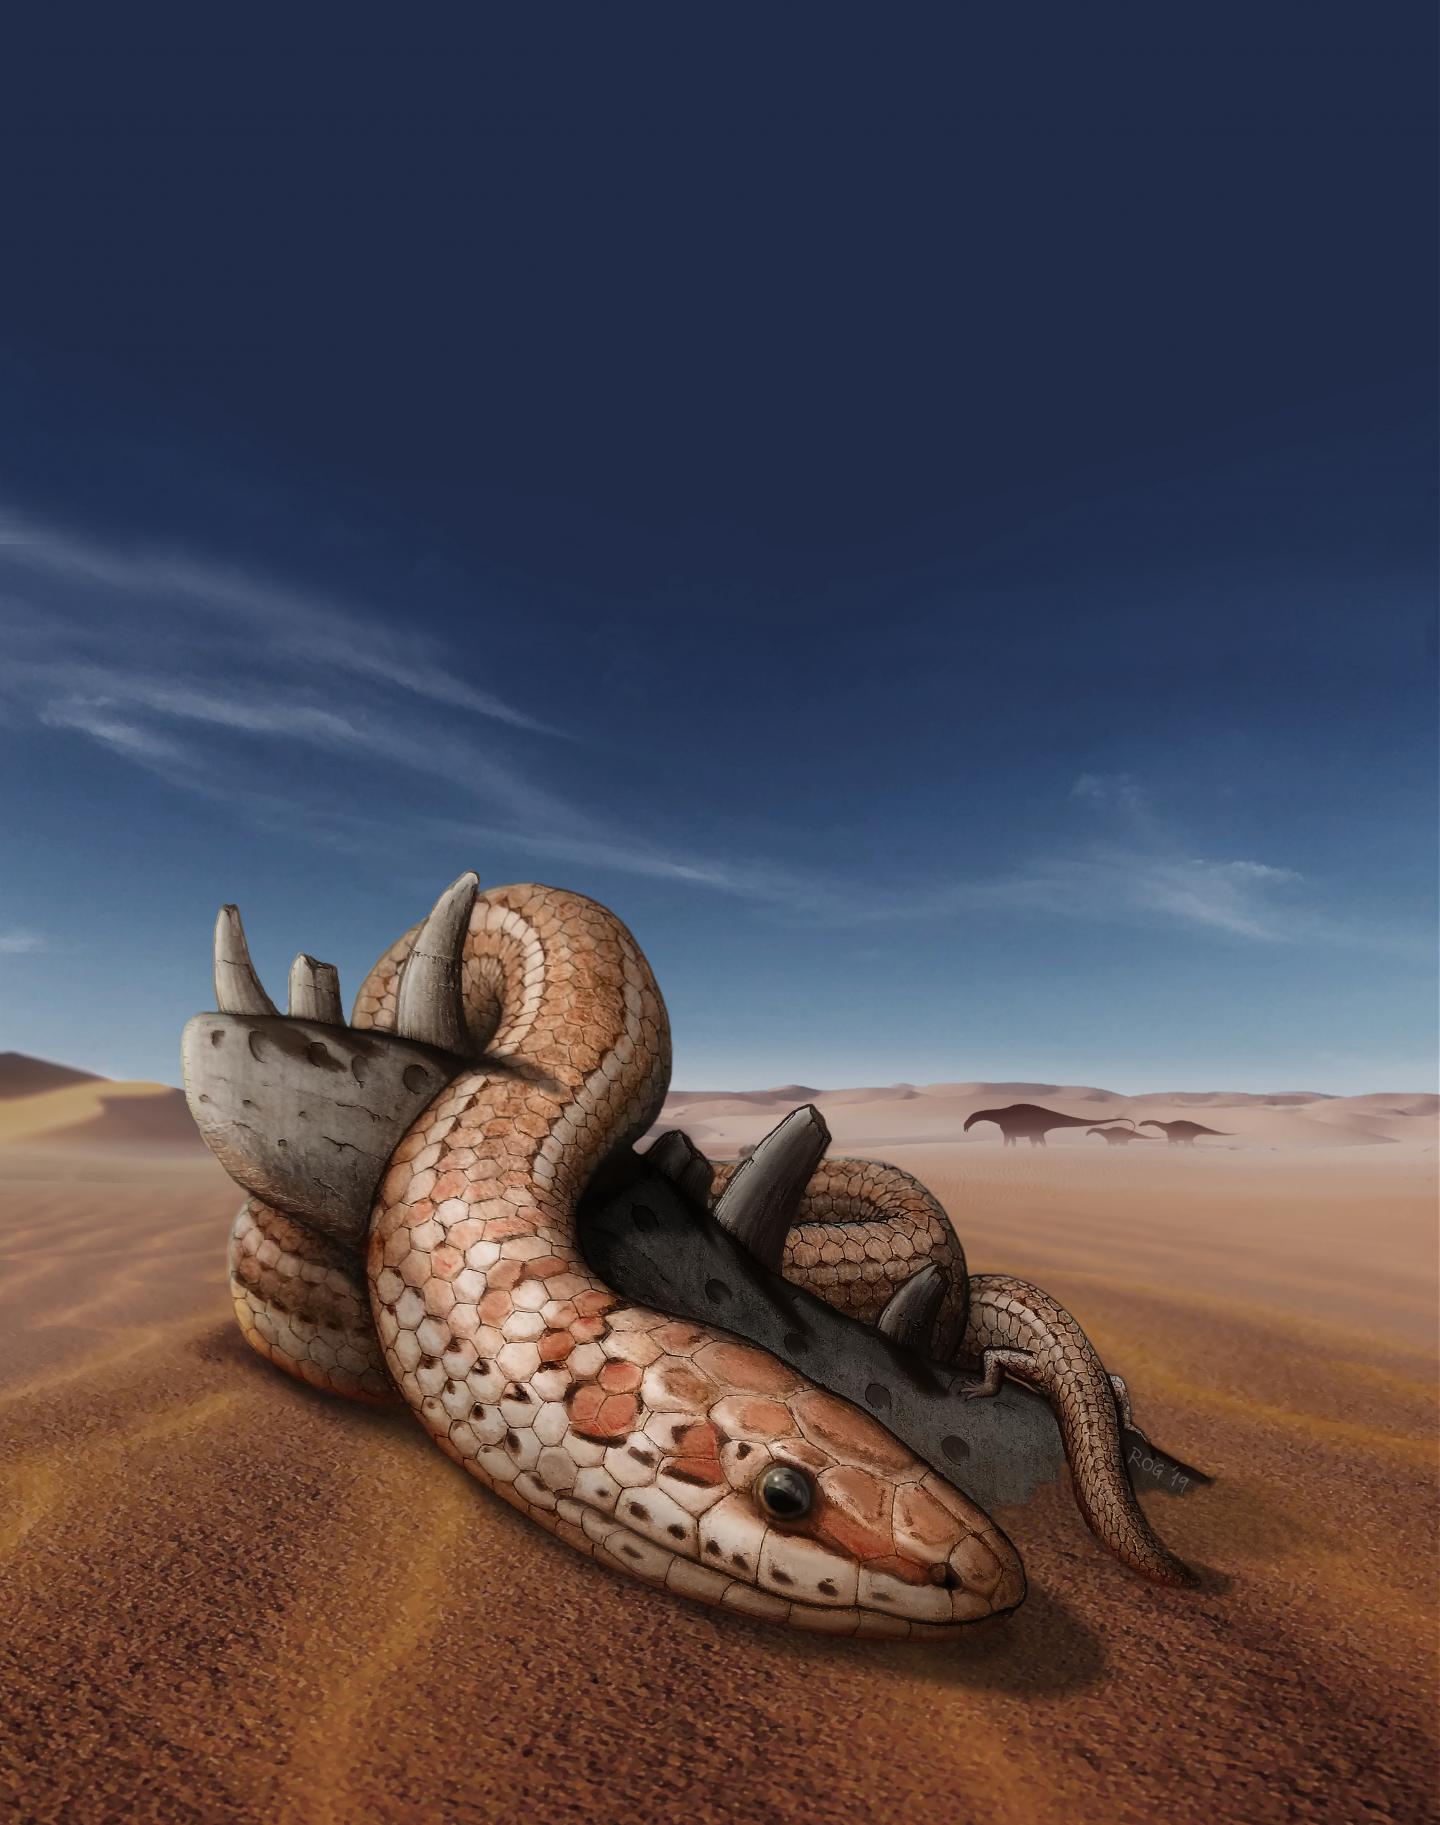 Snake ancestors had legs, cheekbones 100 million years ago: Study
